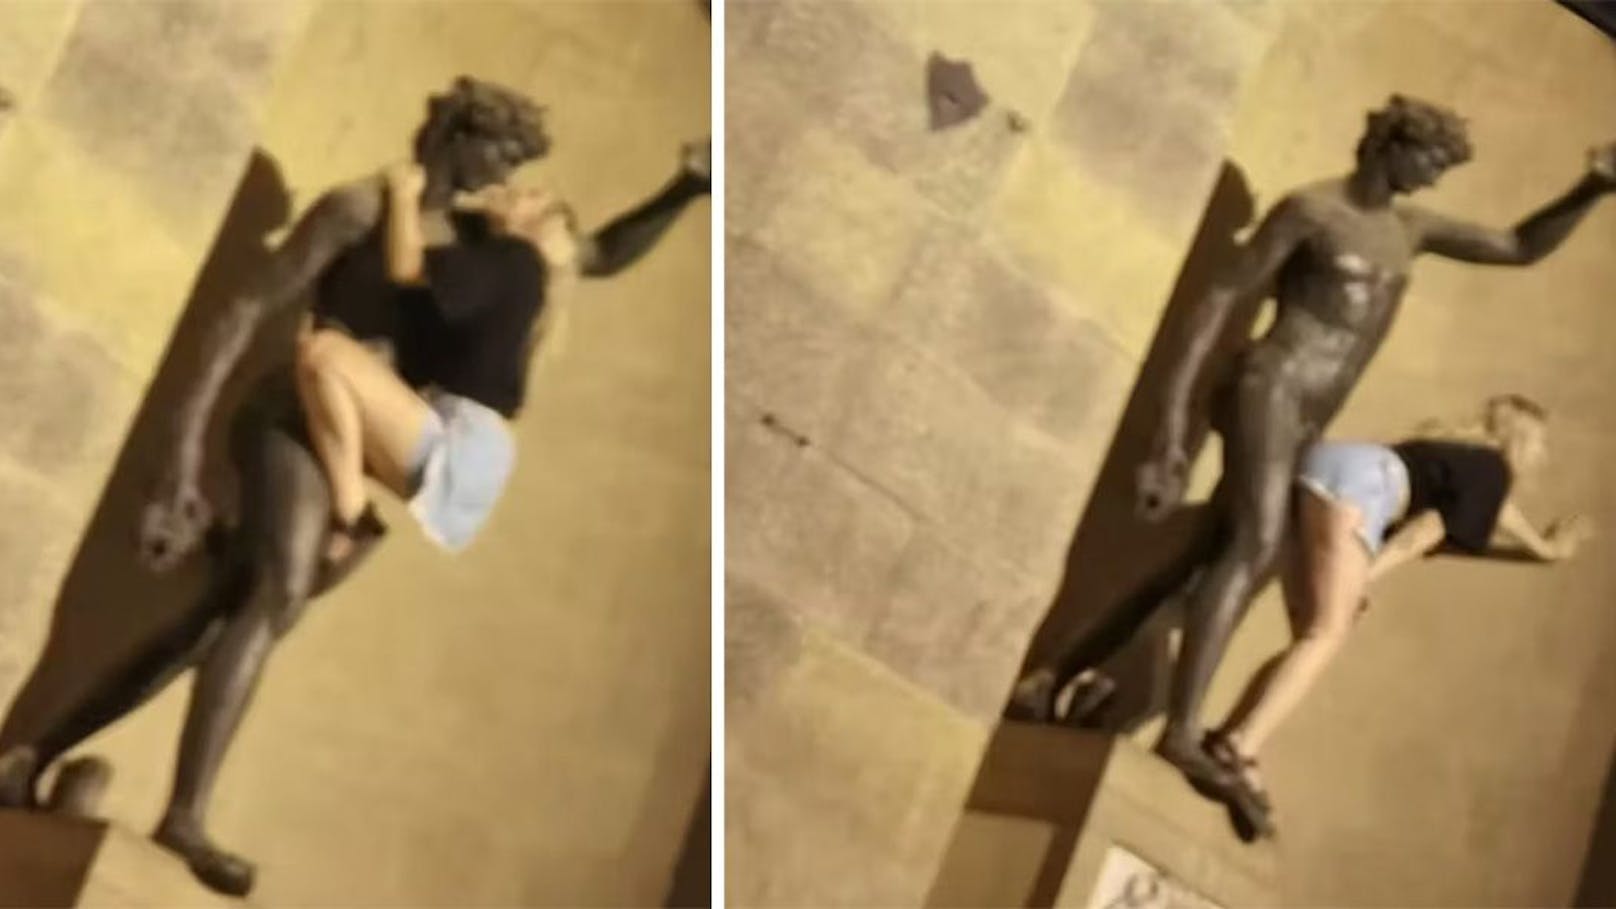 Touristin simuliert Sex mit Statue – sorgt für Skandal